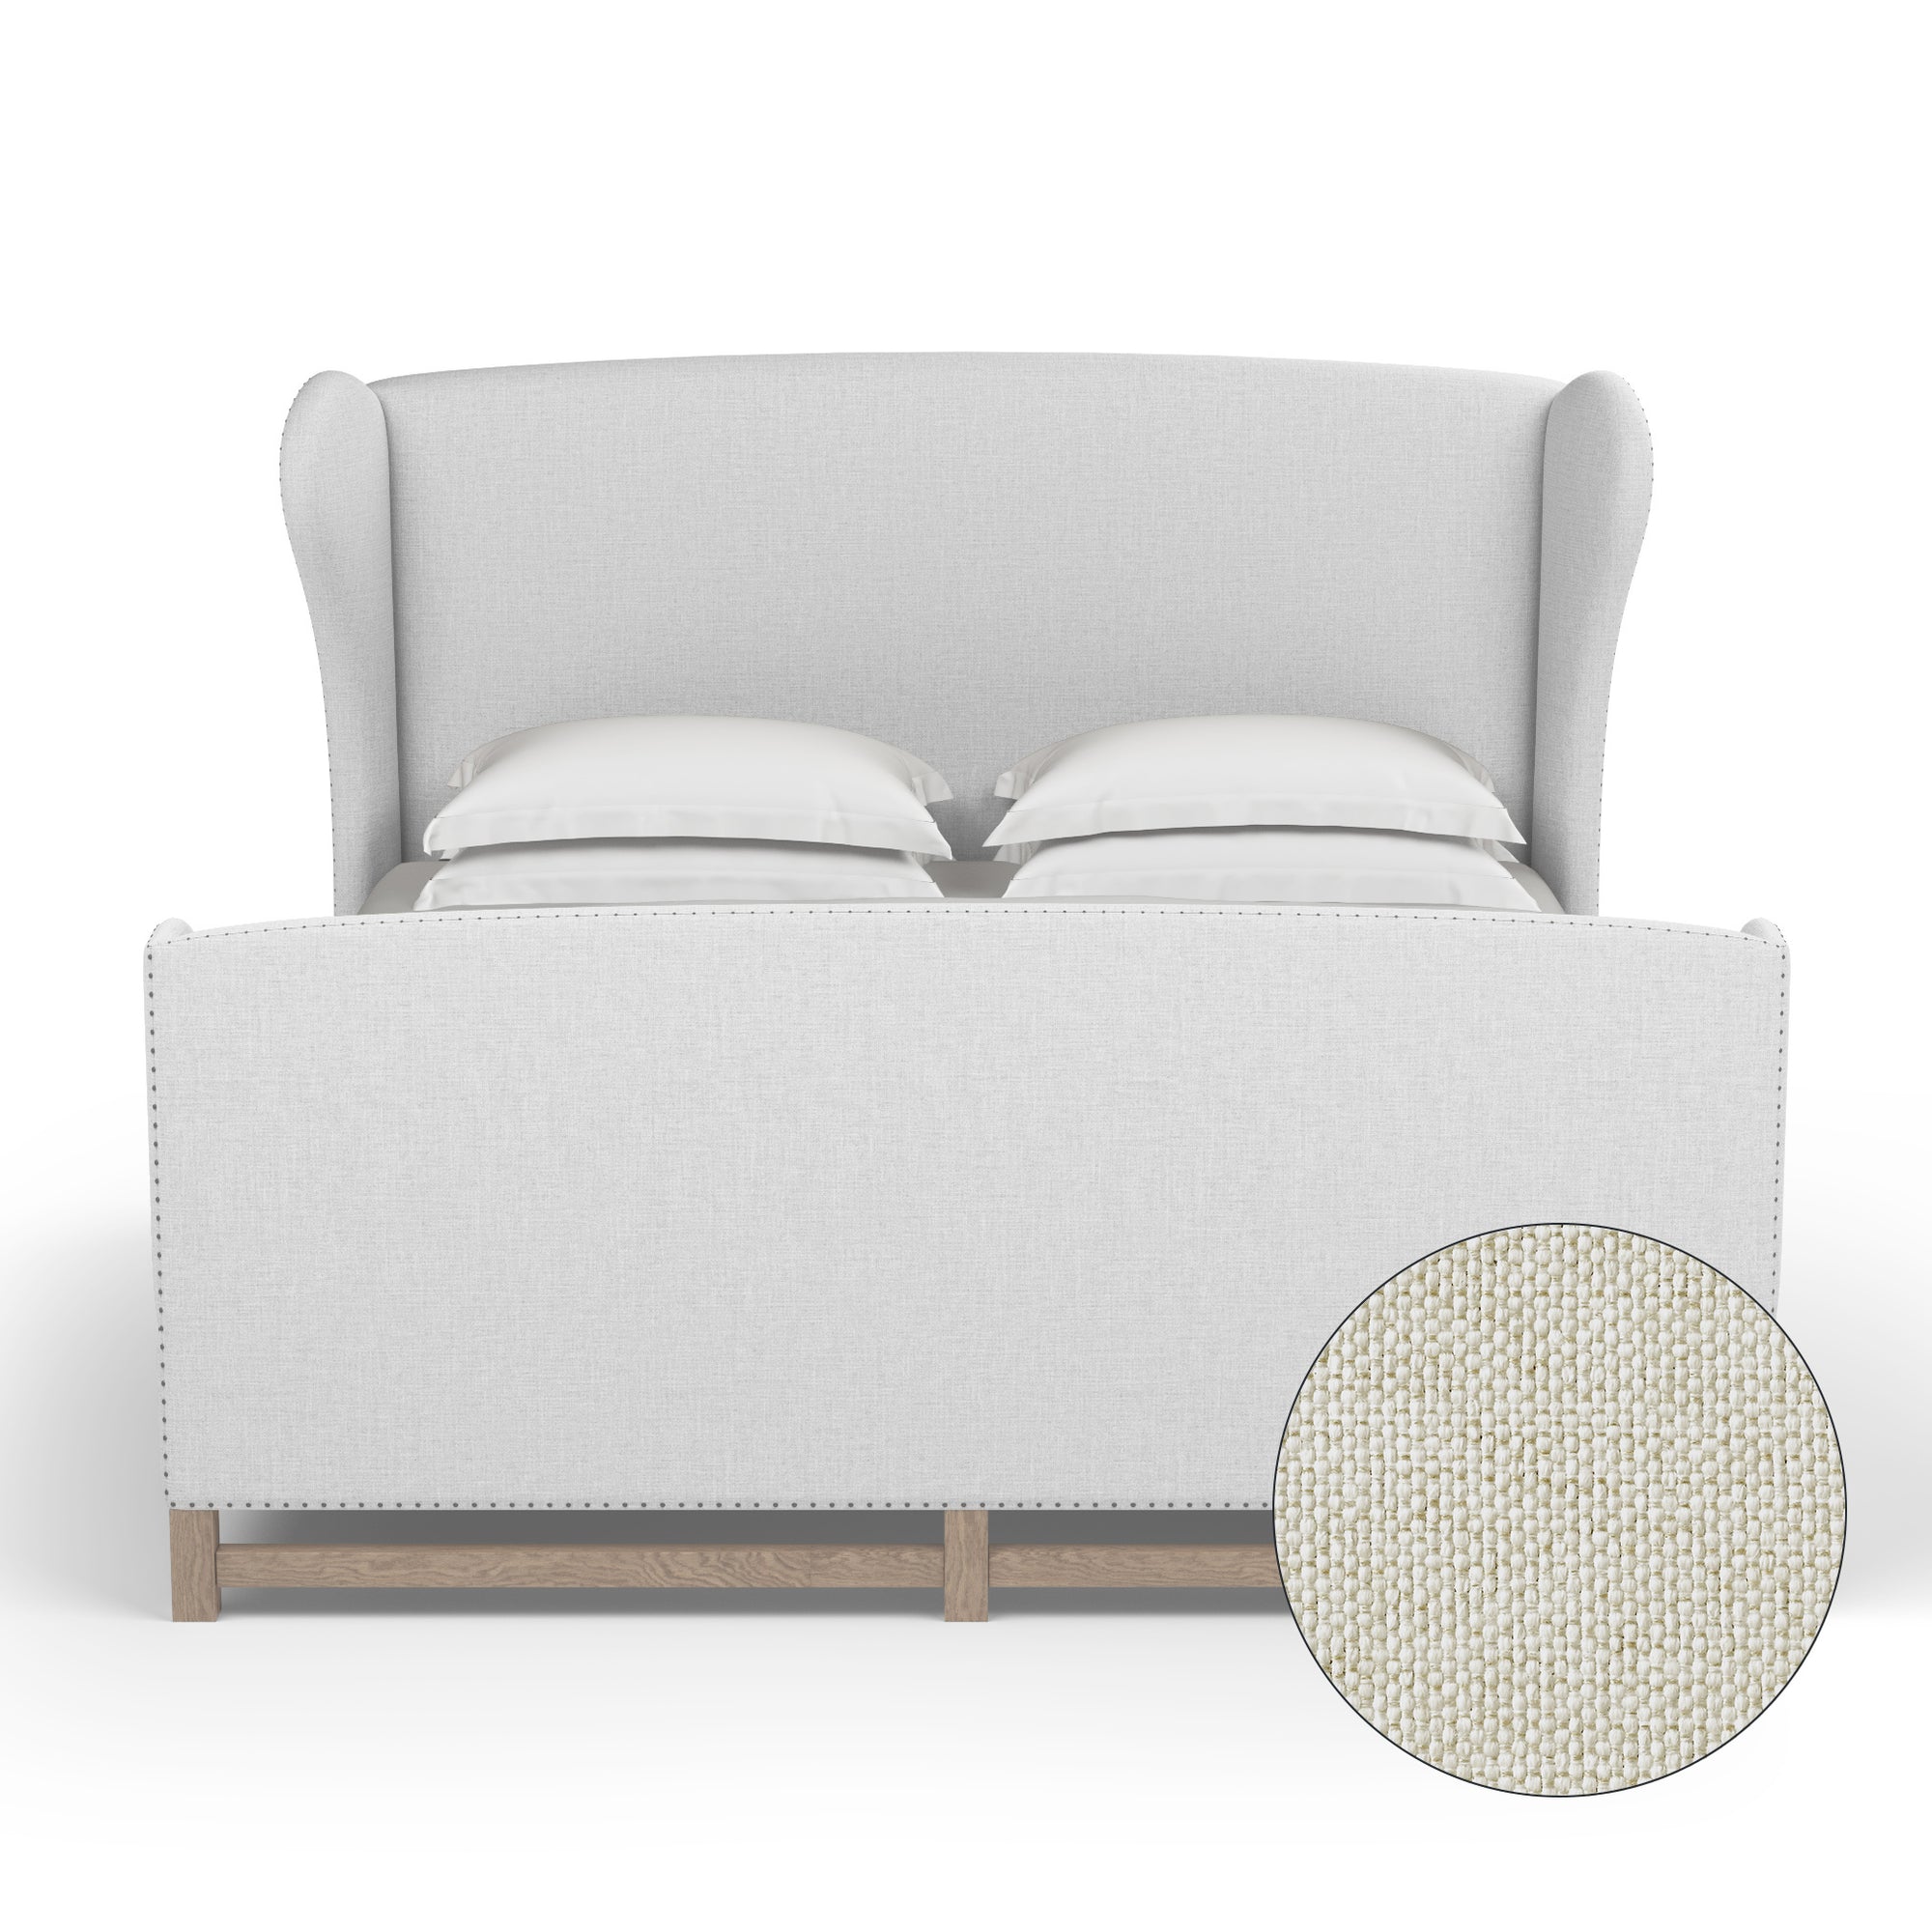 Herbert Wingback Bed w/ Footboard - Alabaster Pebble Weave Linen